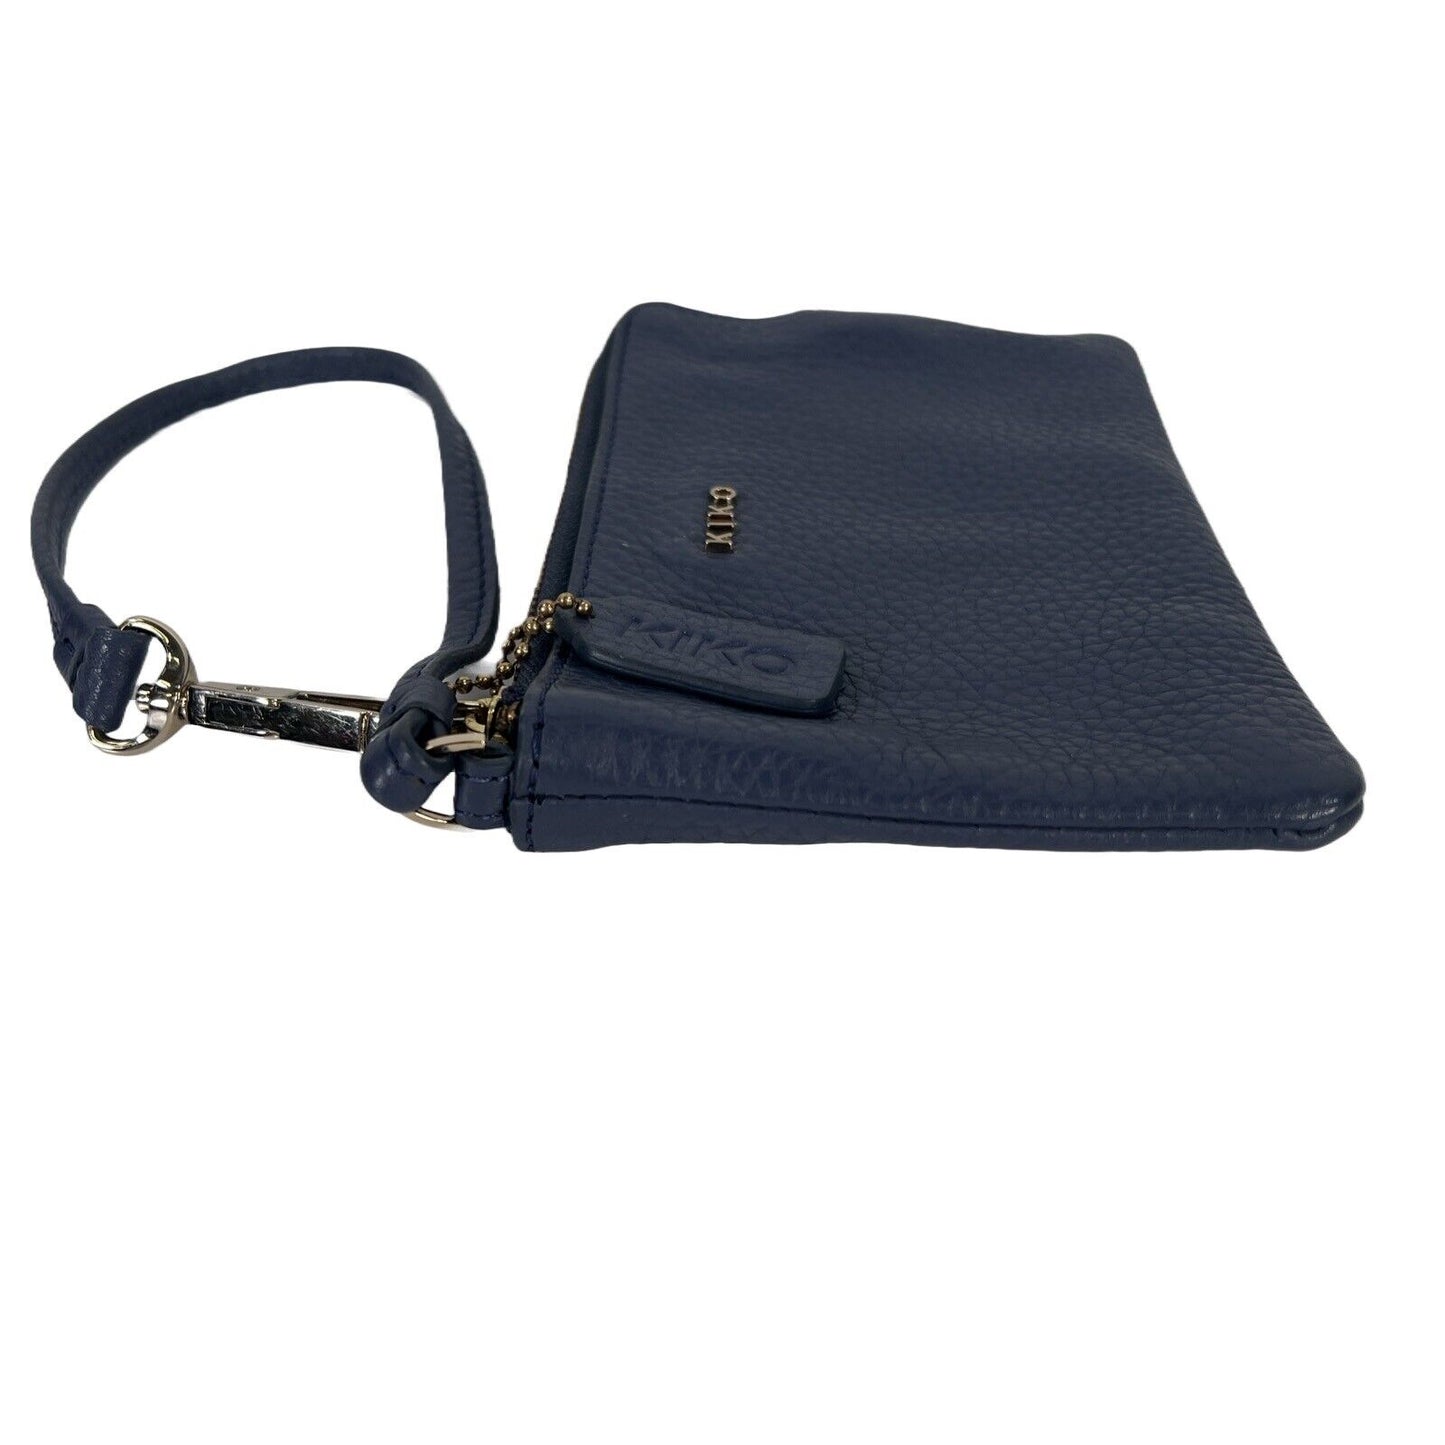 Kiko Women's Blue Leather Zip Close Wristlet Wallet One Size